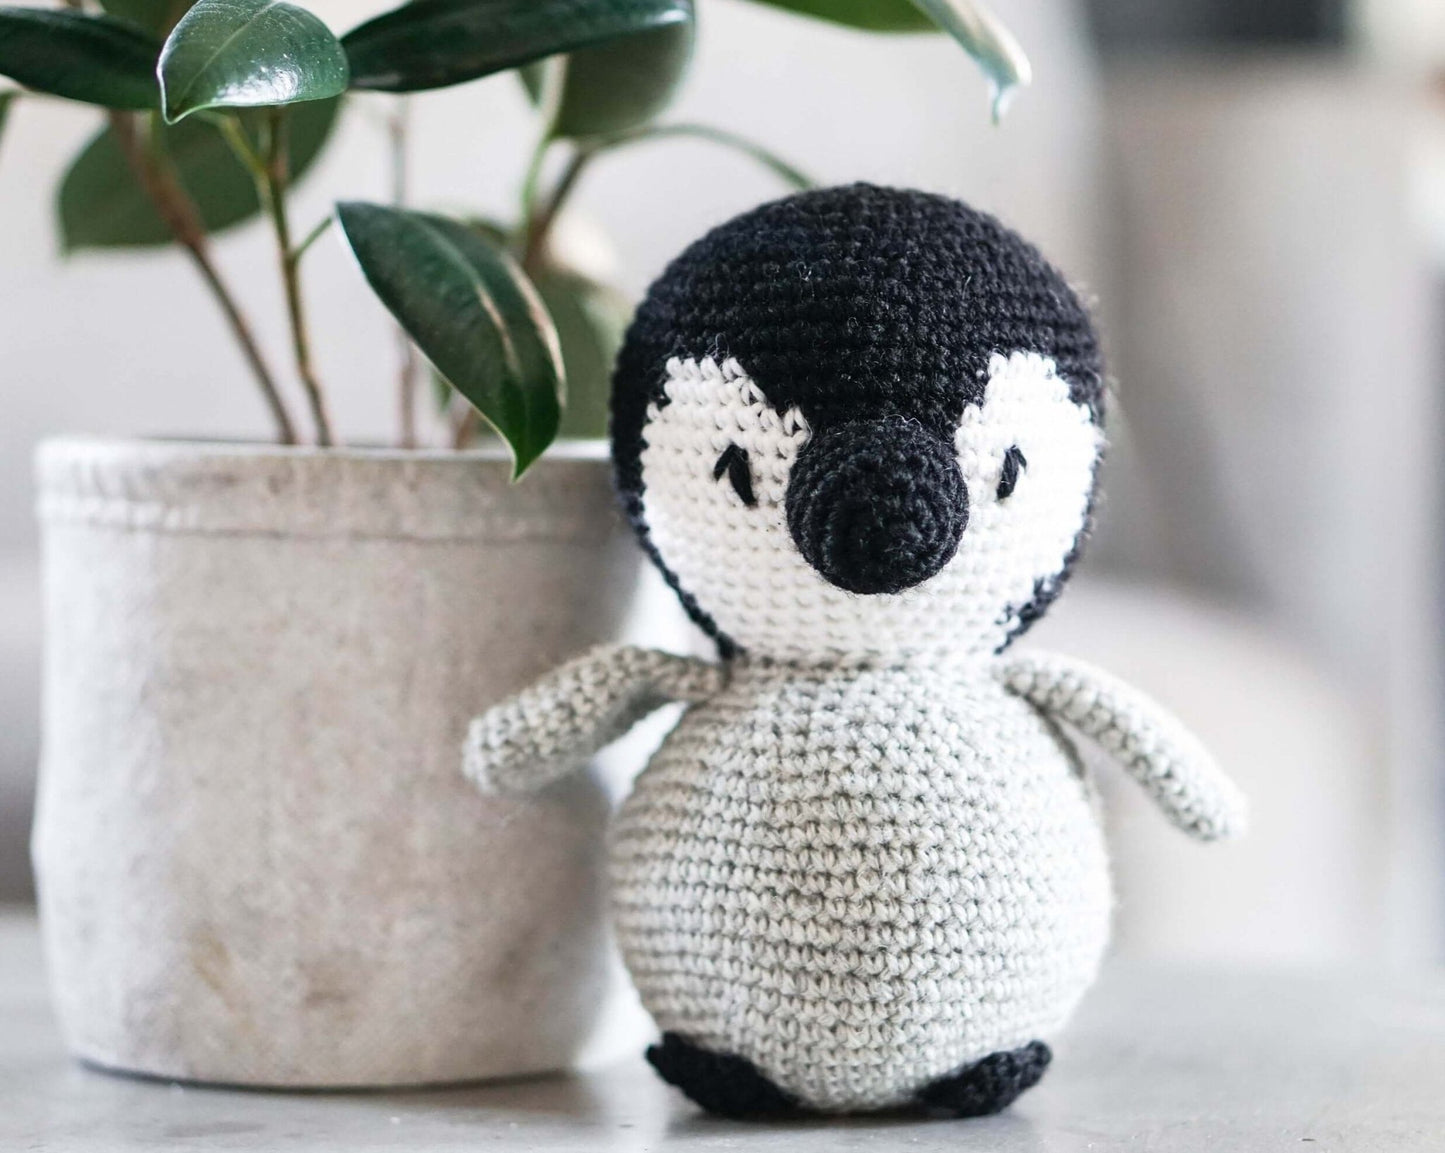 PSX_20191203_180305  Pingouin en crochet, Pingouin, Crochet diy